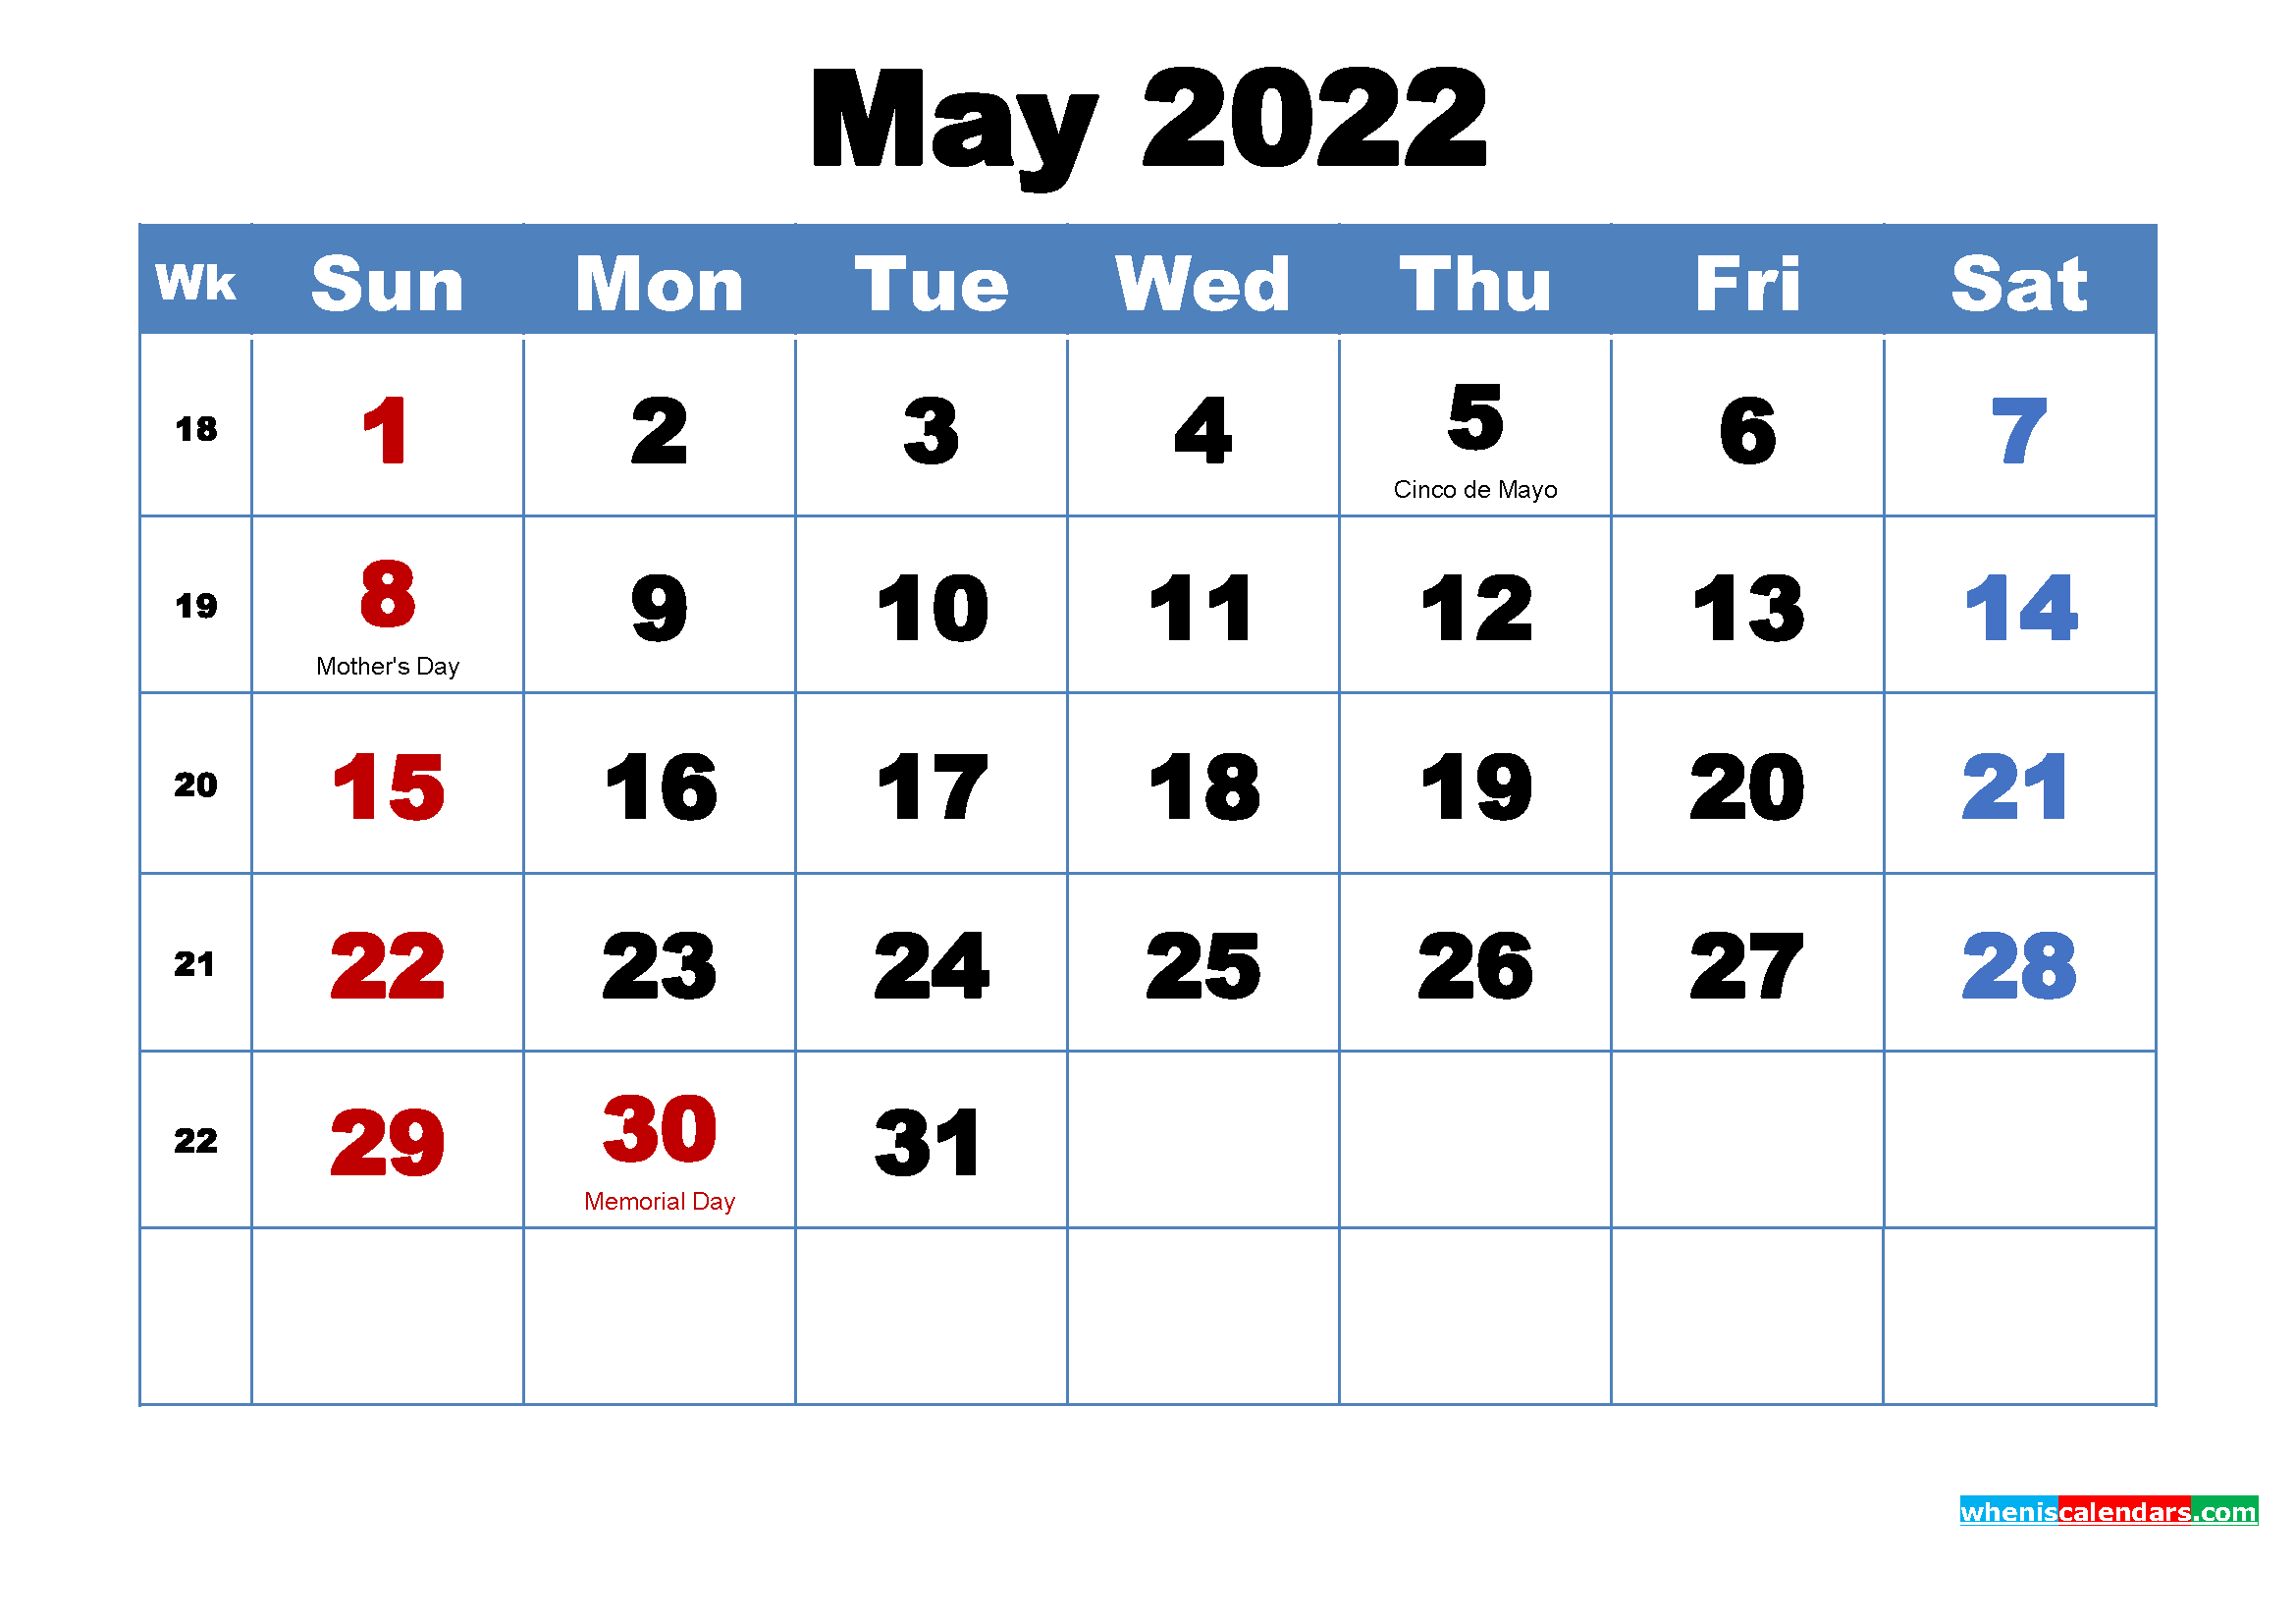 May 2022 Calendar Wallpaper Download 2339x1654